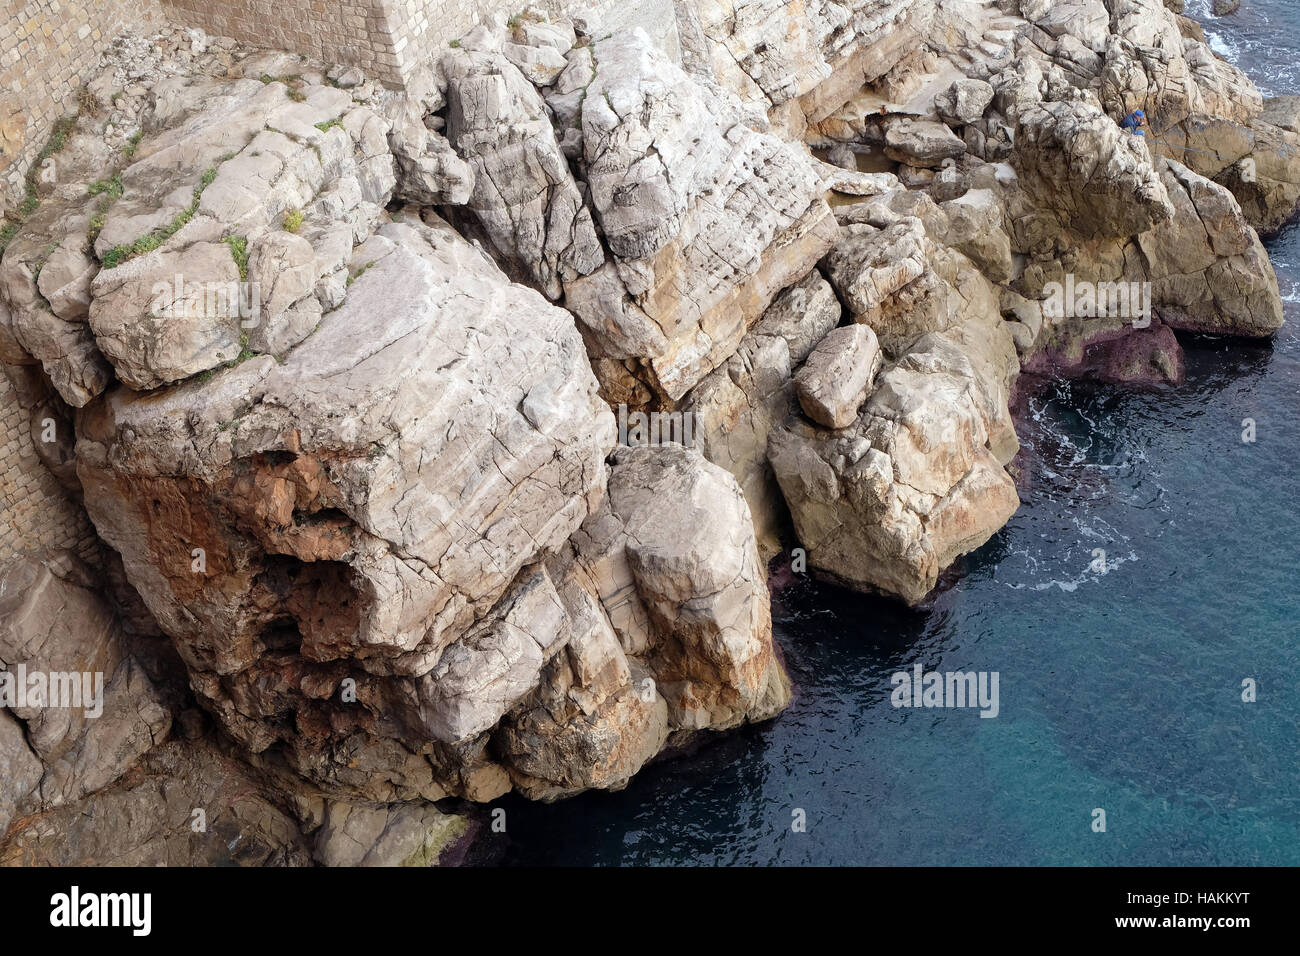 Pictorial blue Adriatic sea in Dubrovnik, Croatia on November 30, 2015. Stock Photo